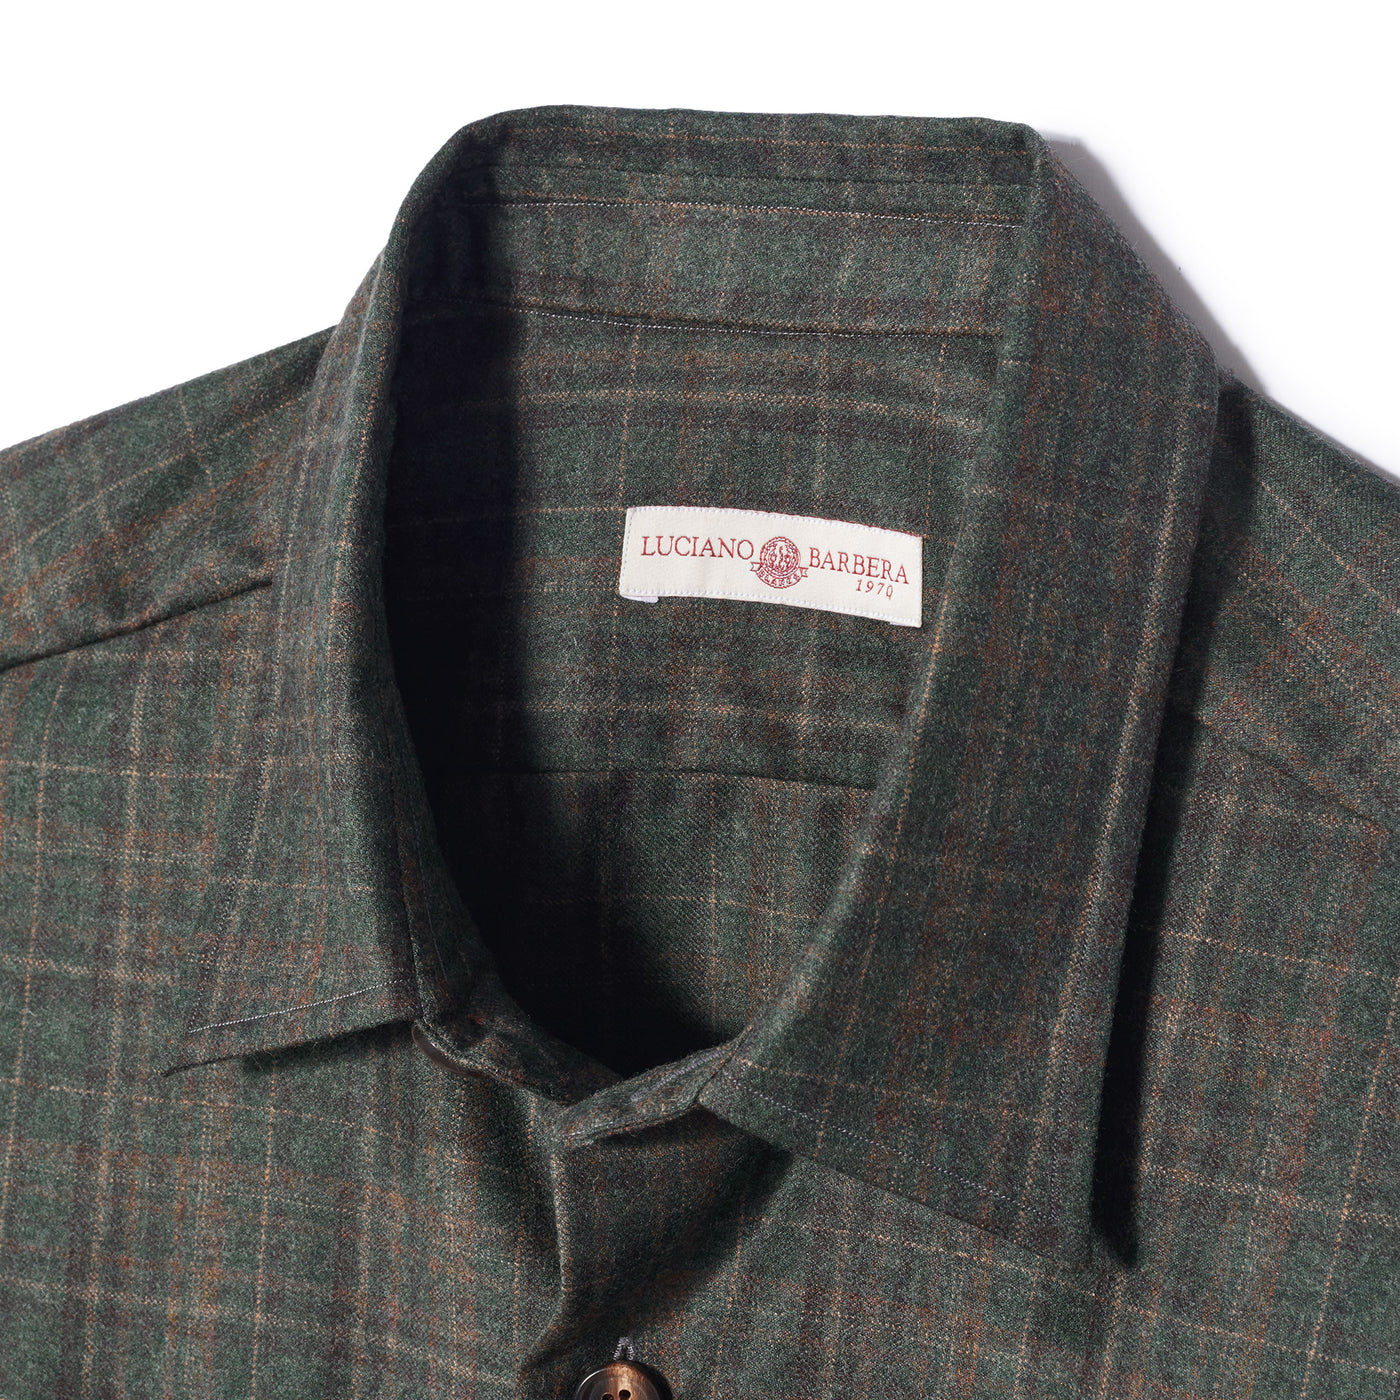 Italian Wool Cashmere Blend Plaid Overshirt - Dark Green Plaid